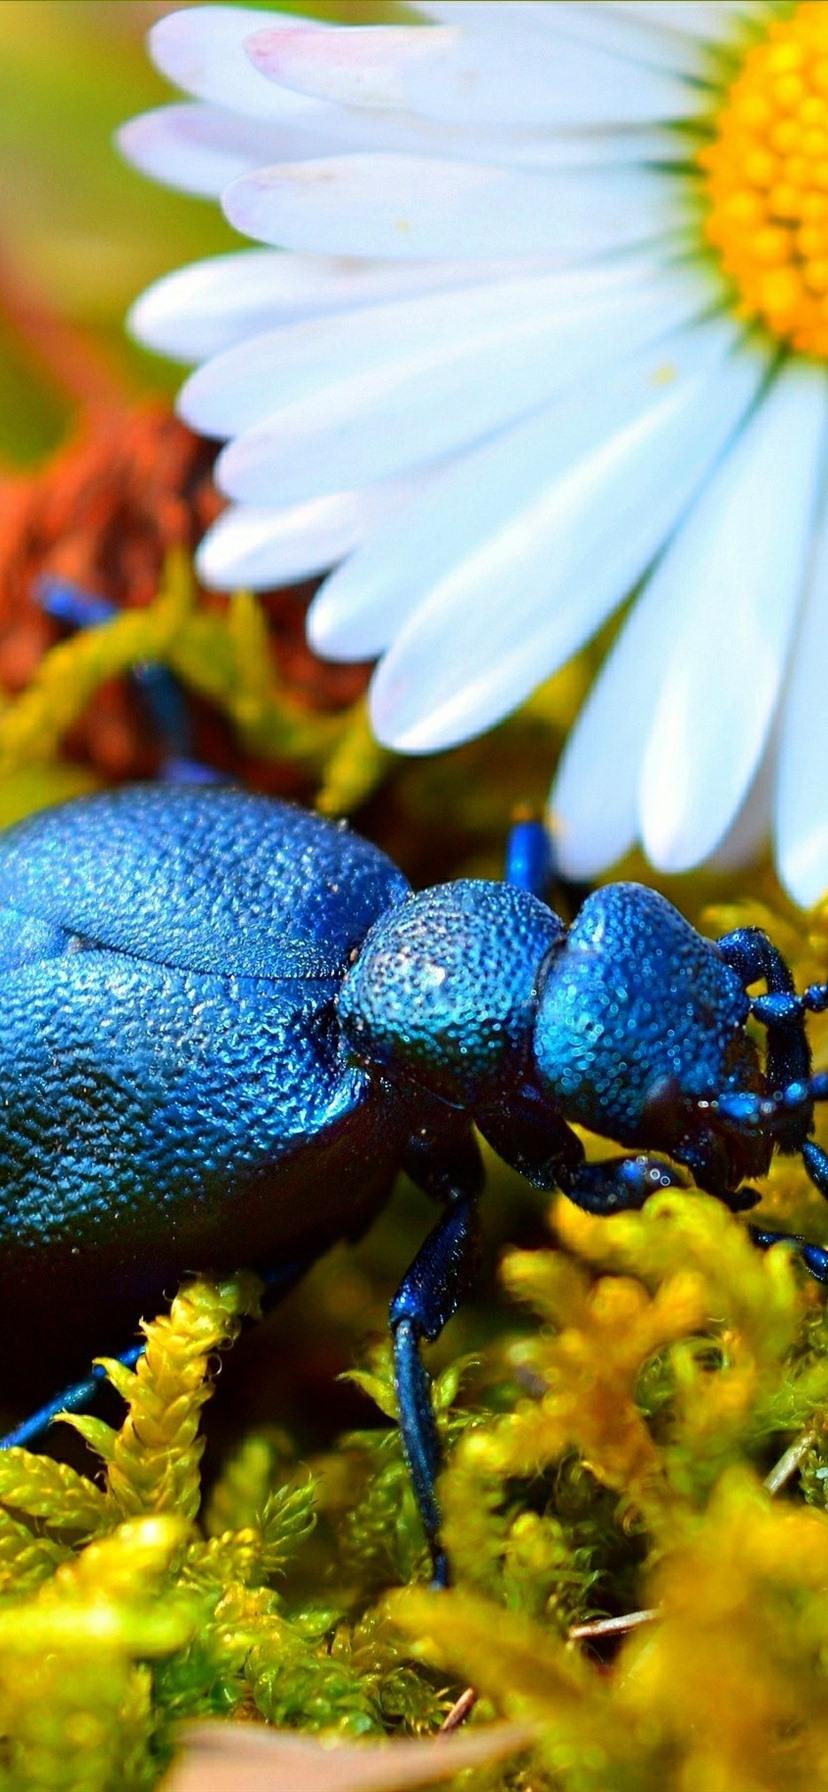 Blue beetle, daisy 828x1792 iPhone XR wallpaper, background